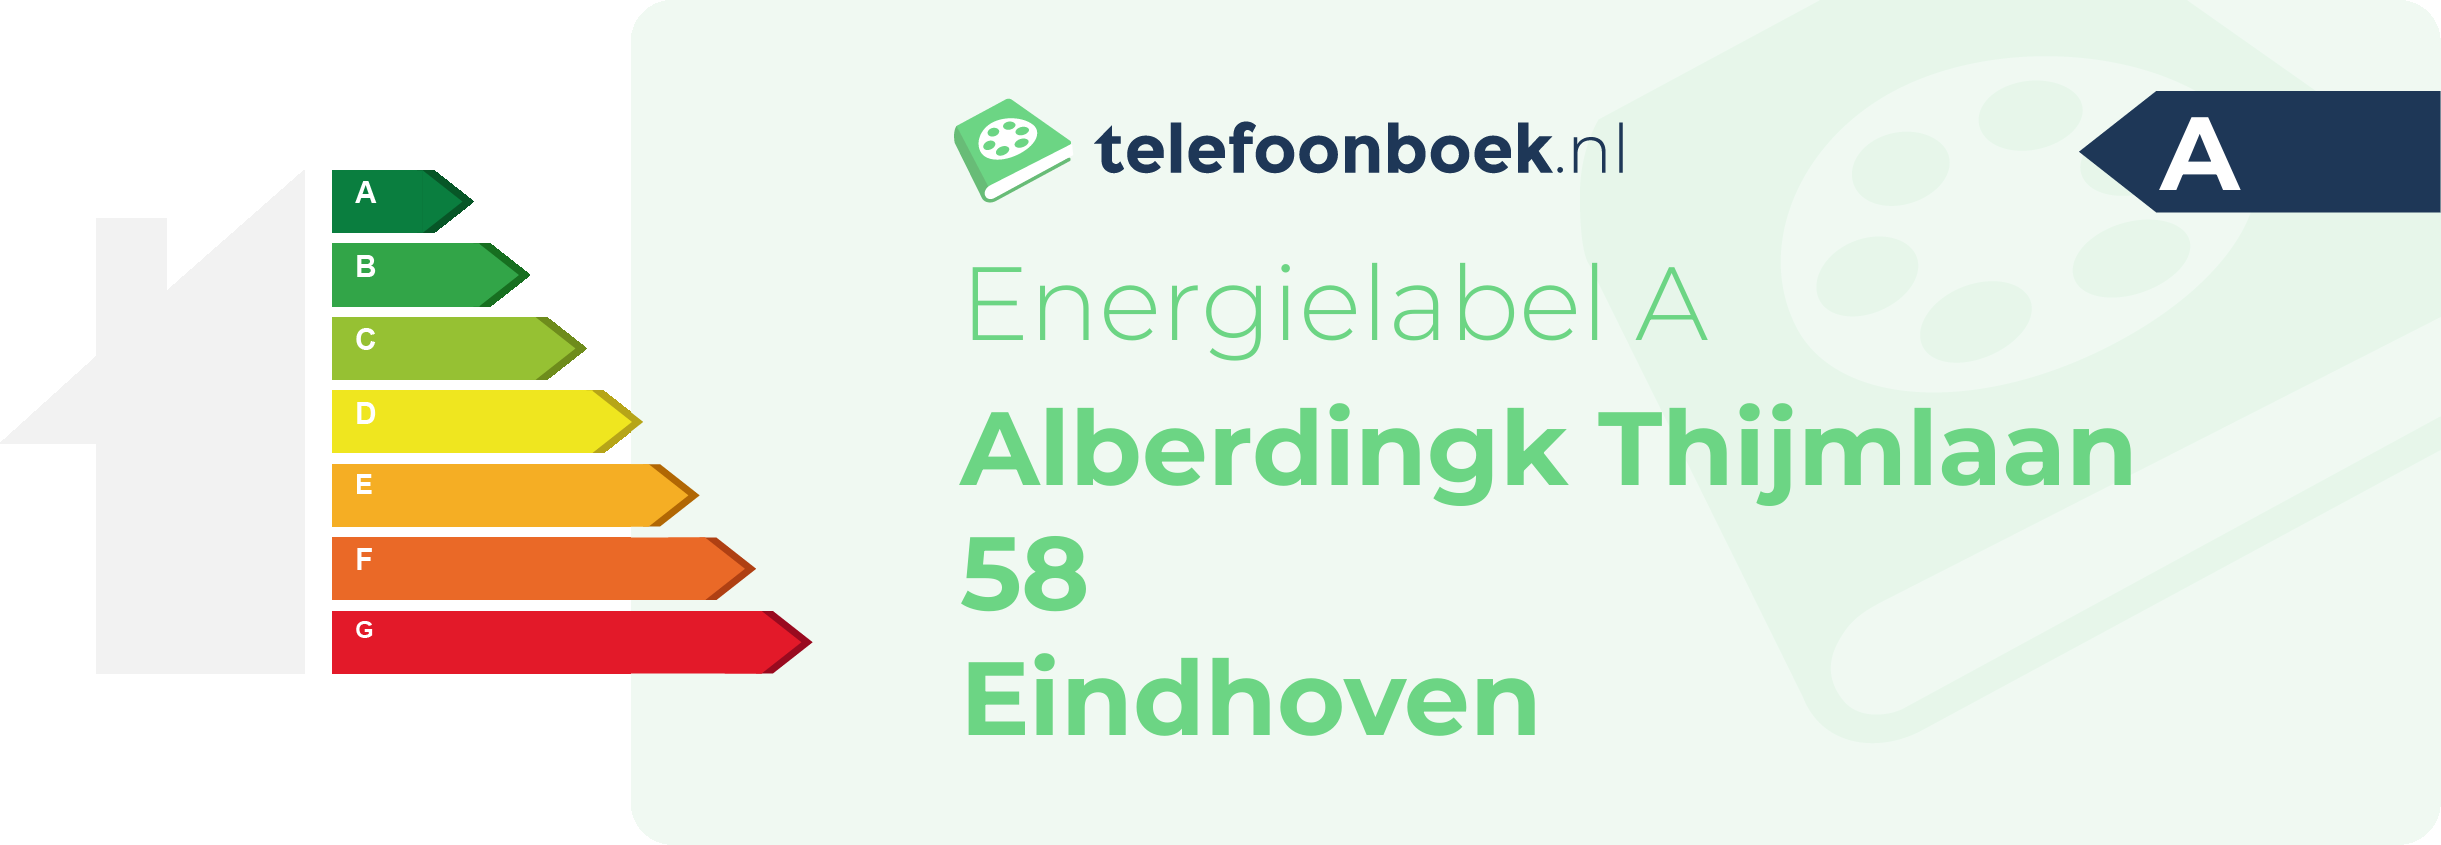 Energielabel Alberdingk Thijmlaan 58 Eindhoven